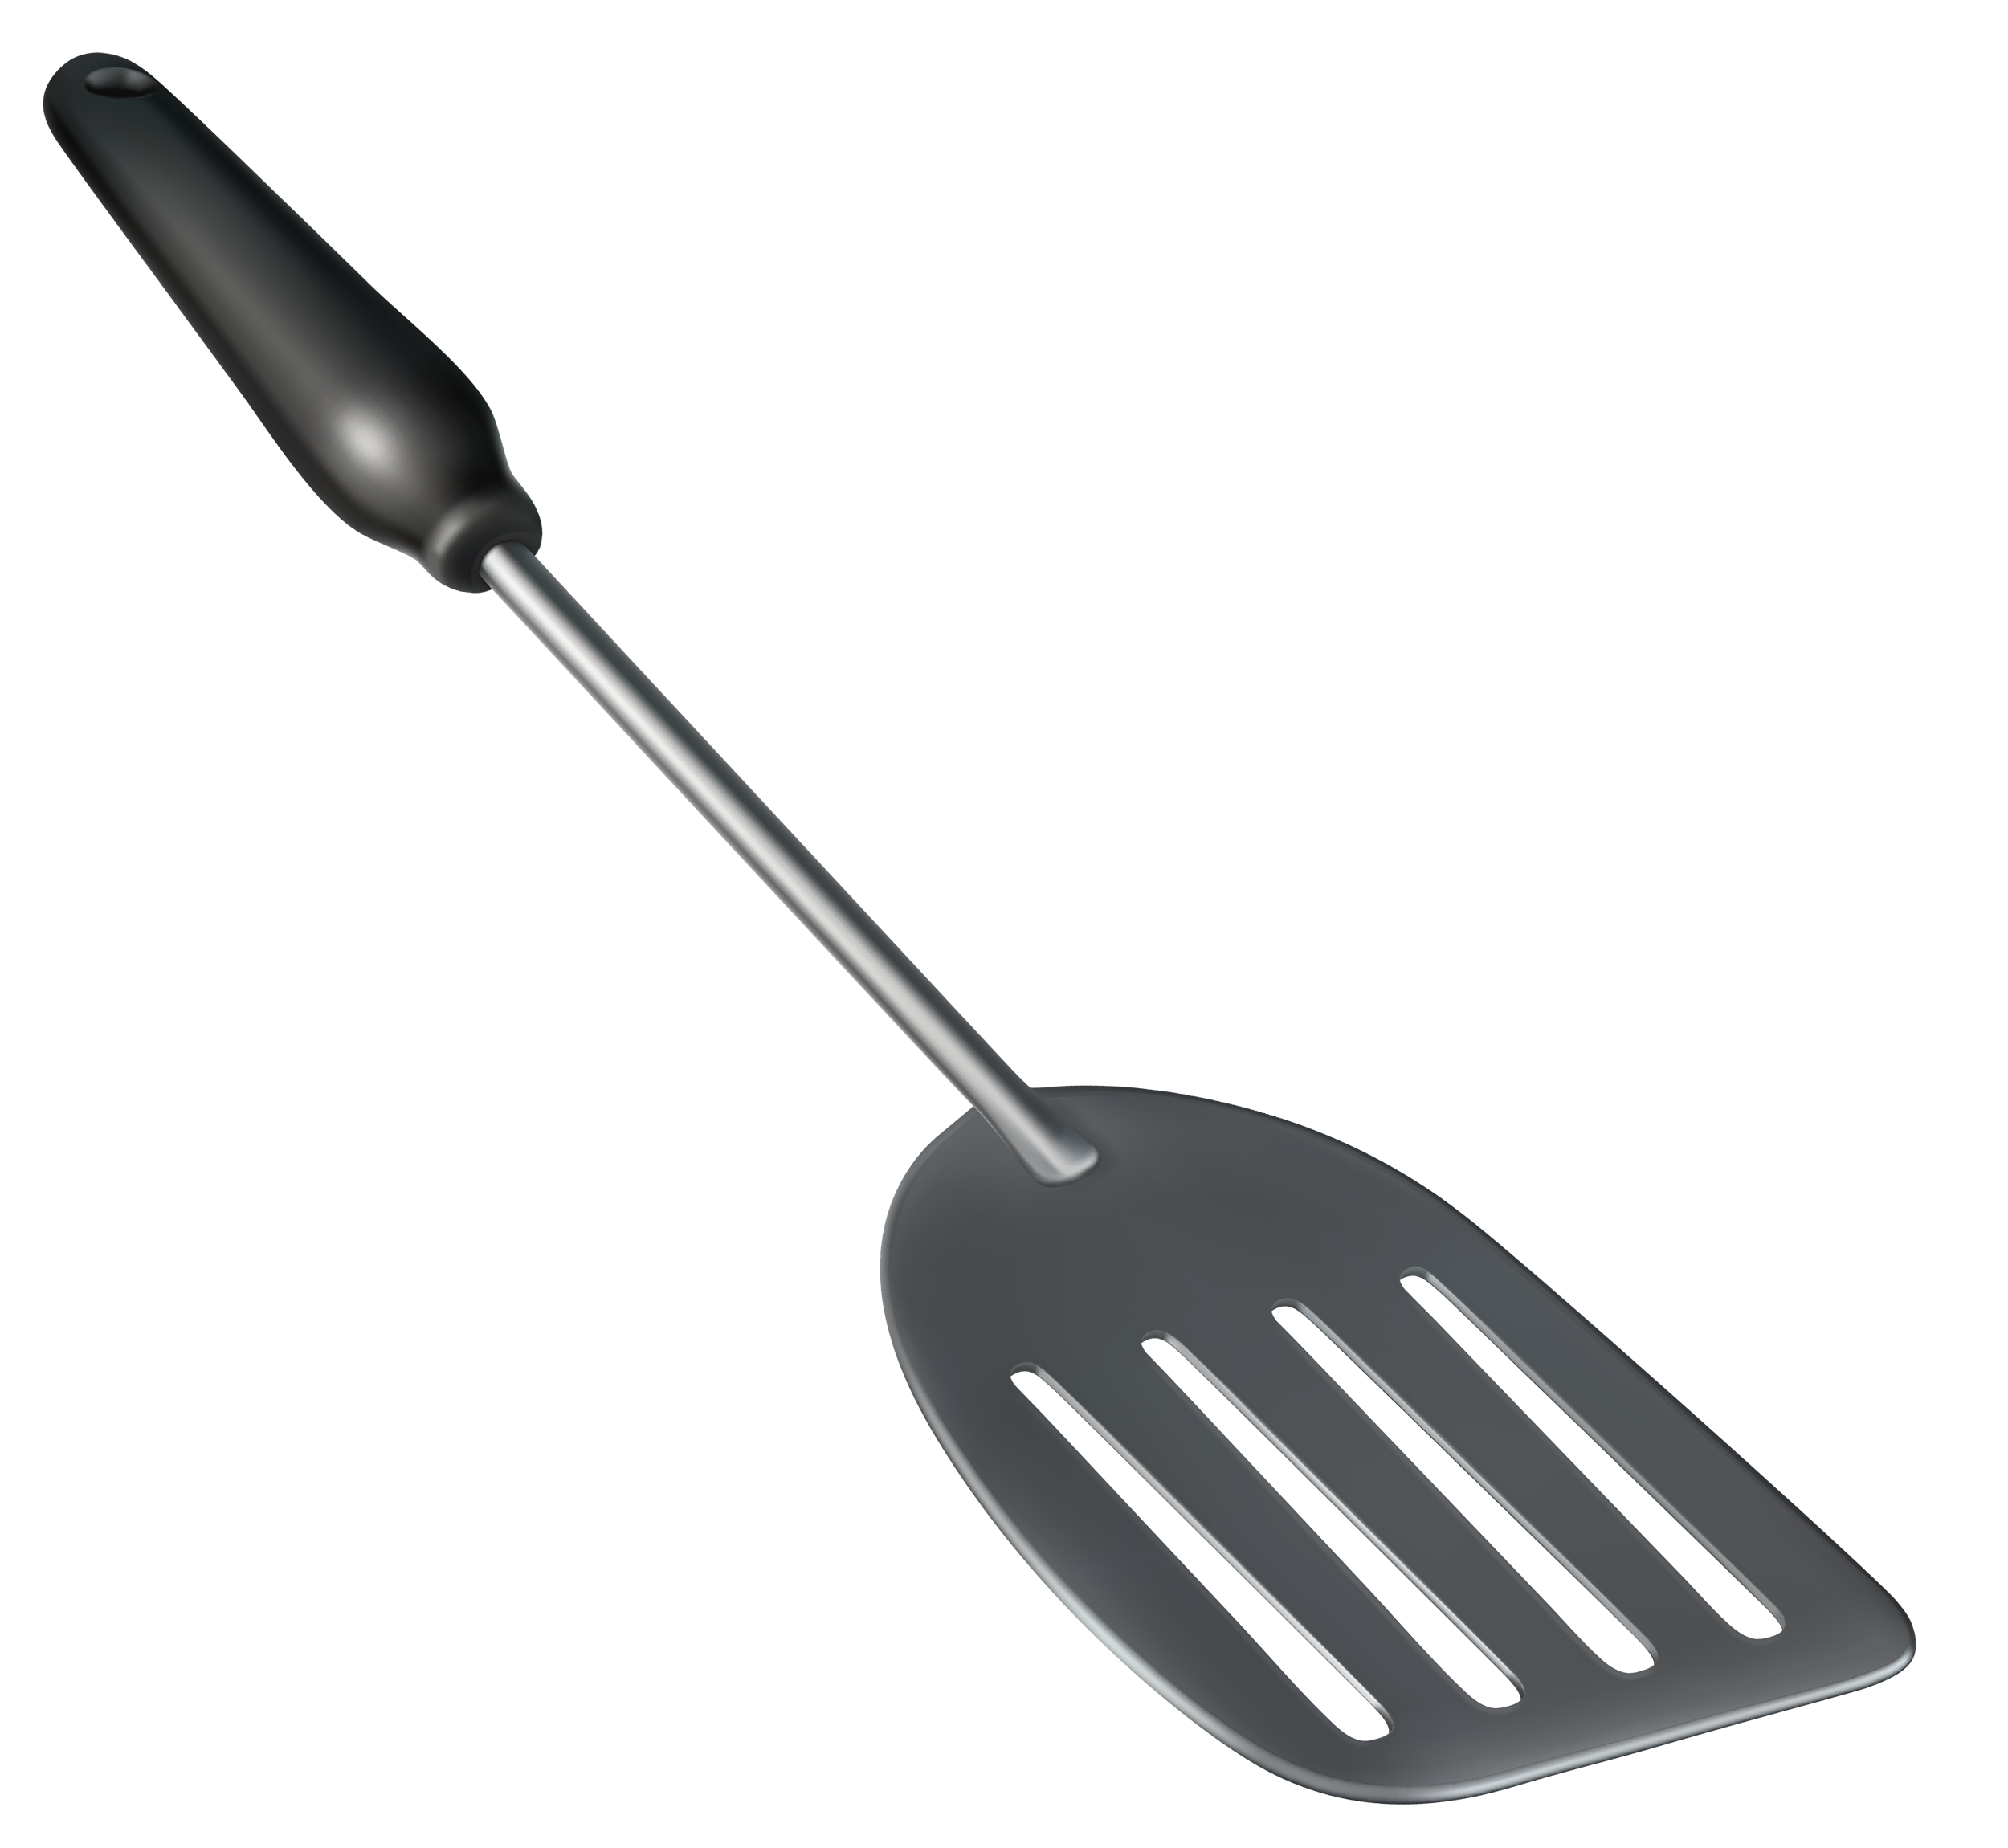 Fork spatula